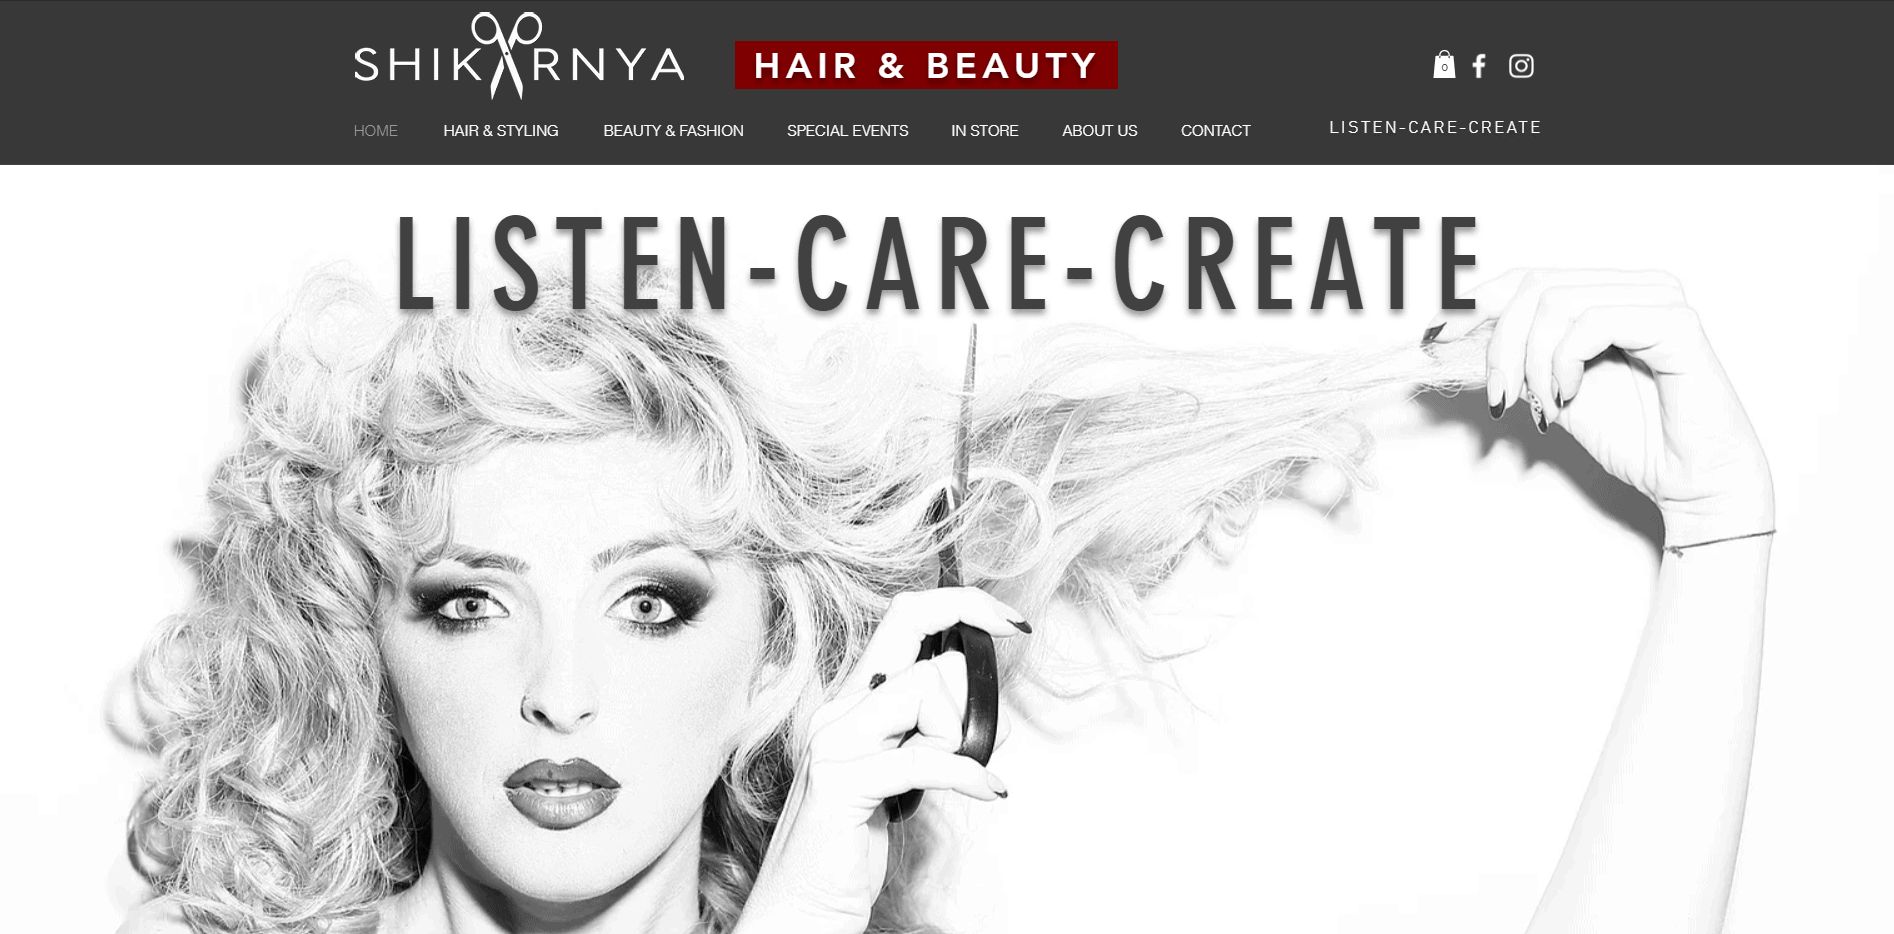 Shikarnya Hair & Beauty Salon